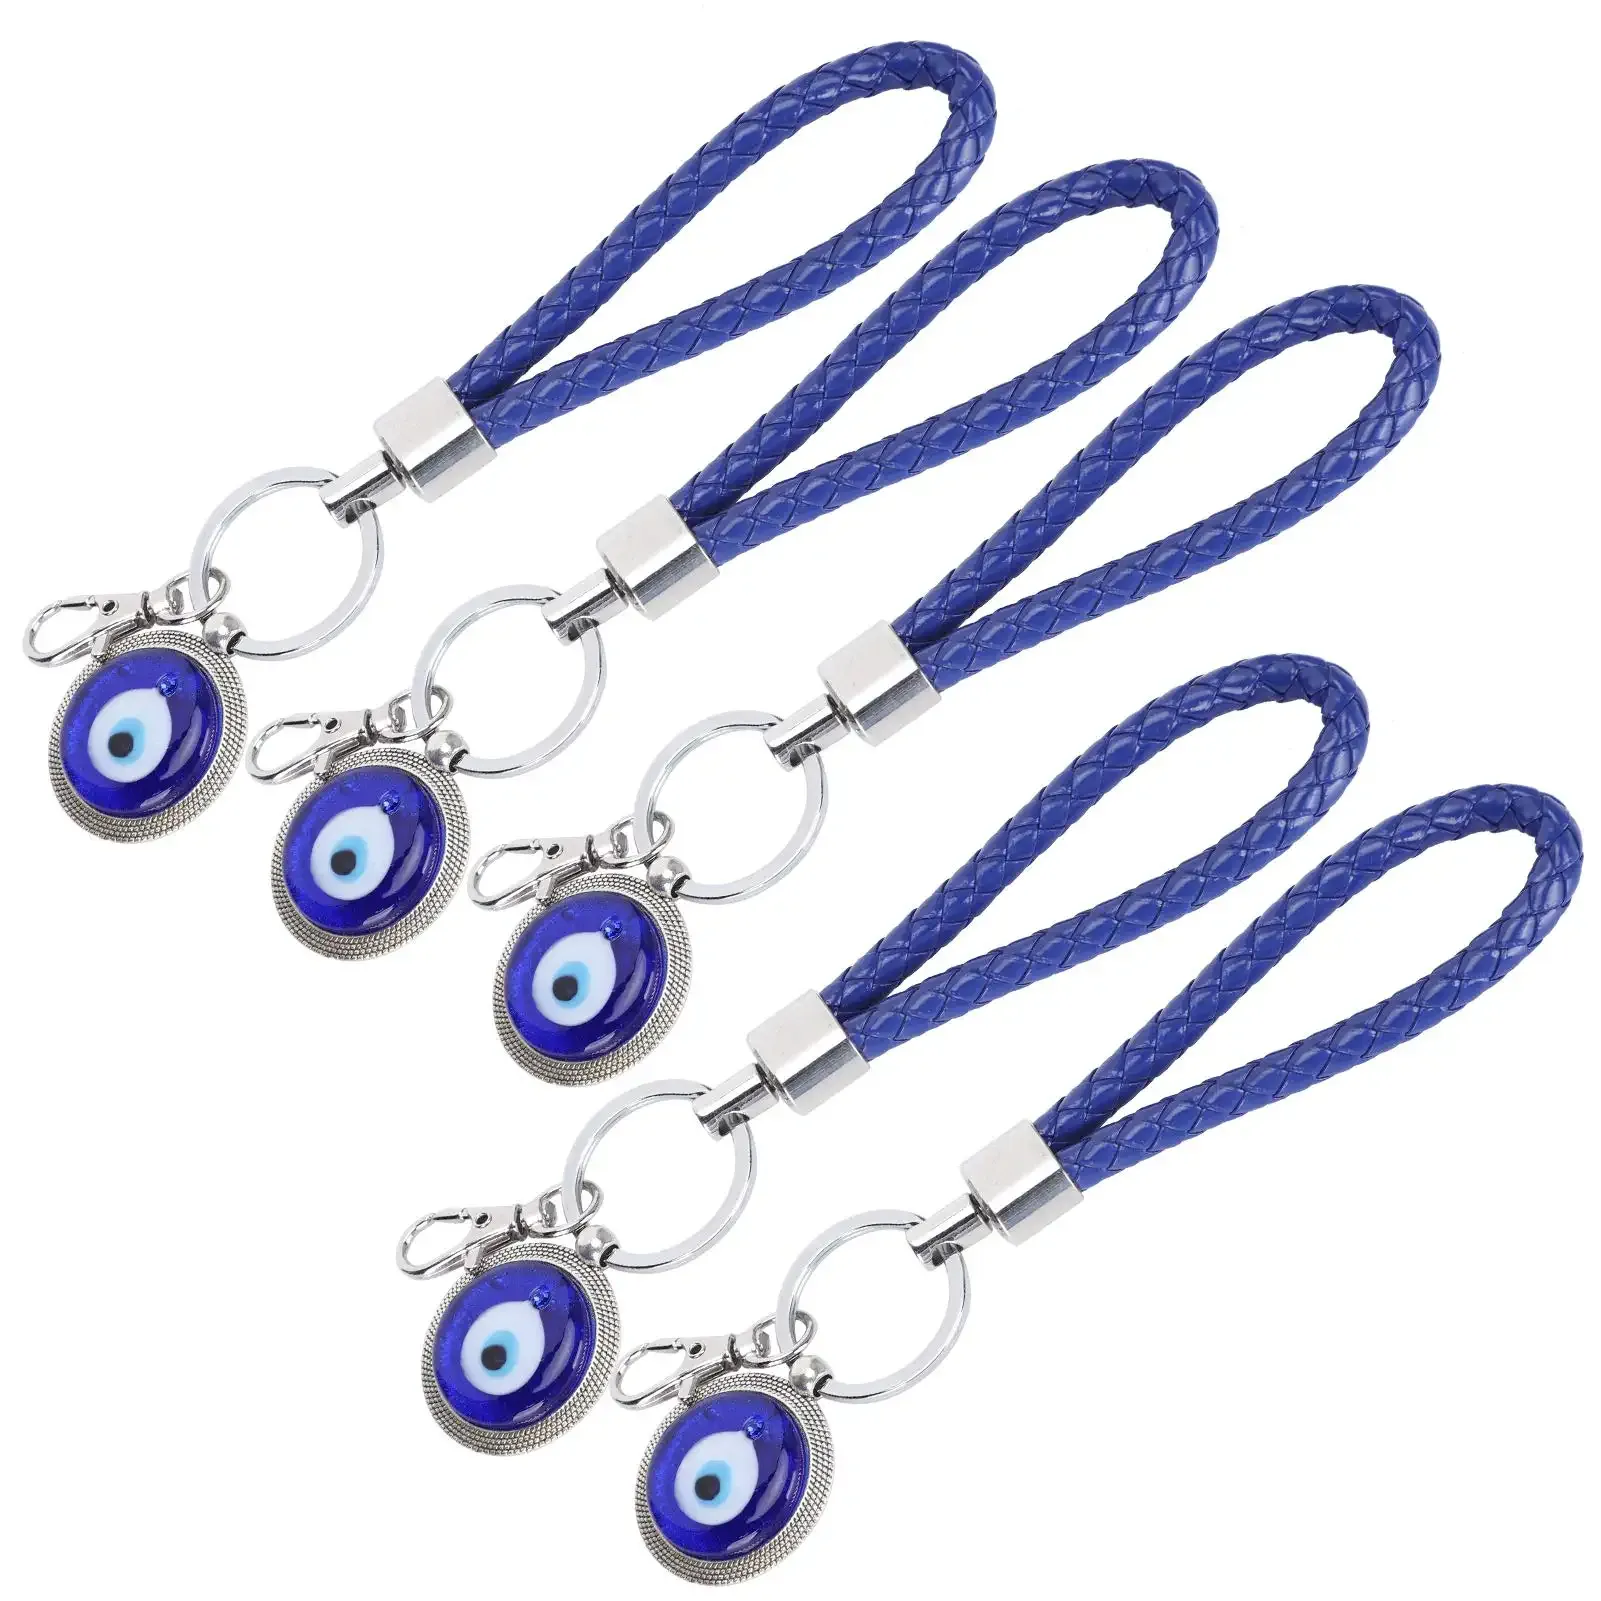 3ml evil eye keychain turkish blue evil eye keychain charms pendants evil eye amulet keychain for man woman purse handbag bag decoration gift